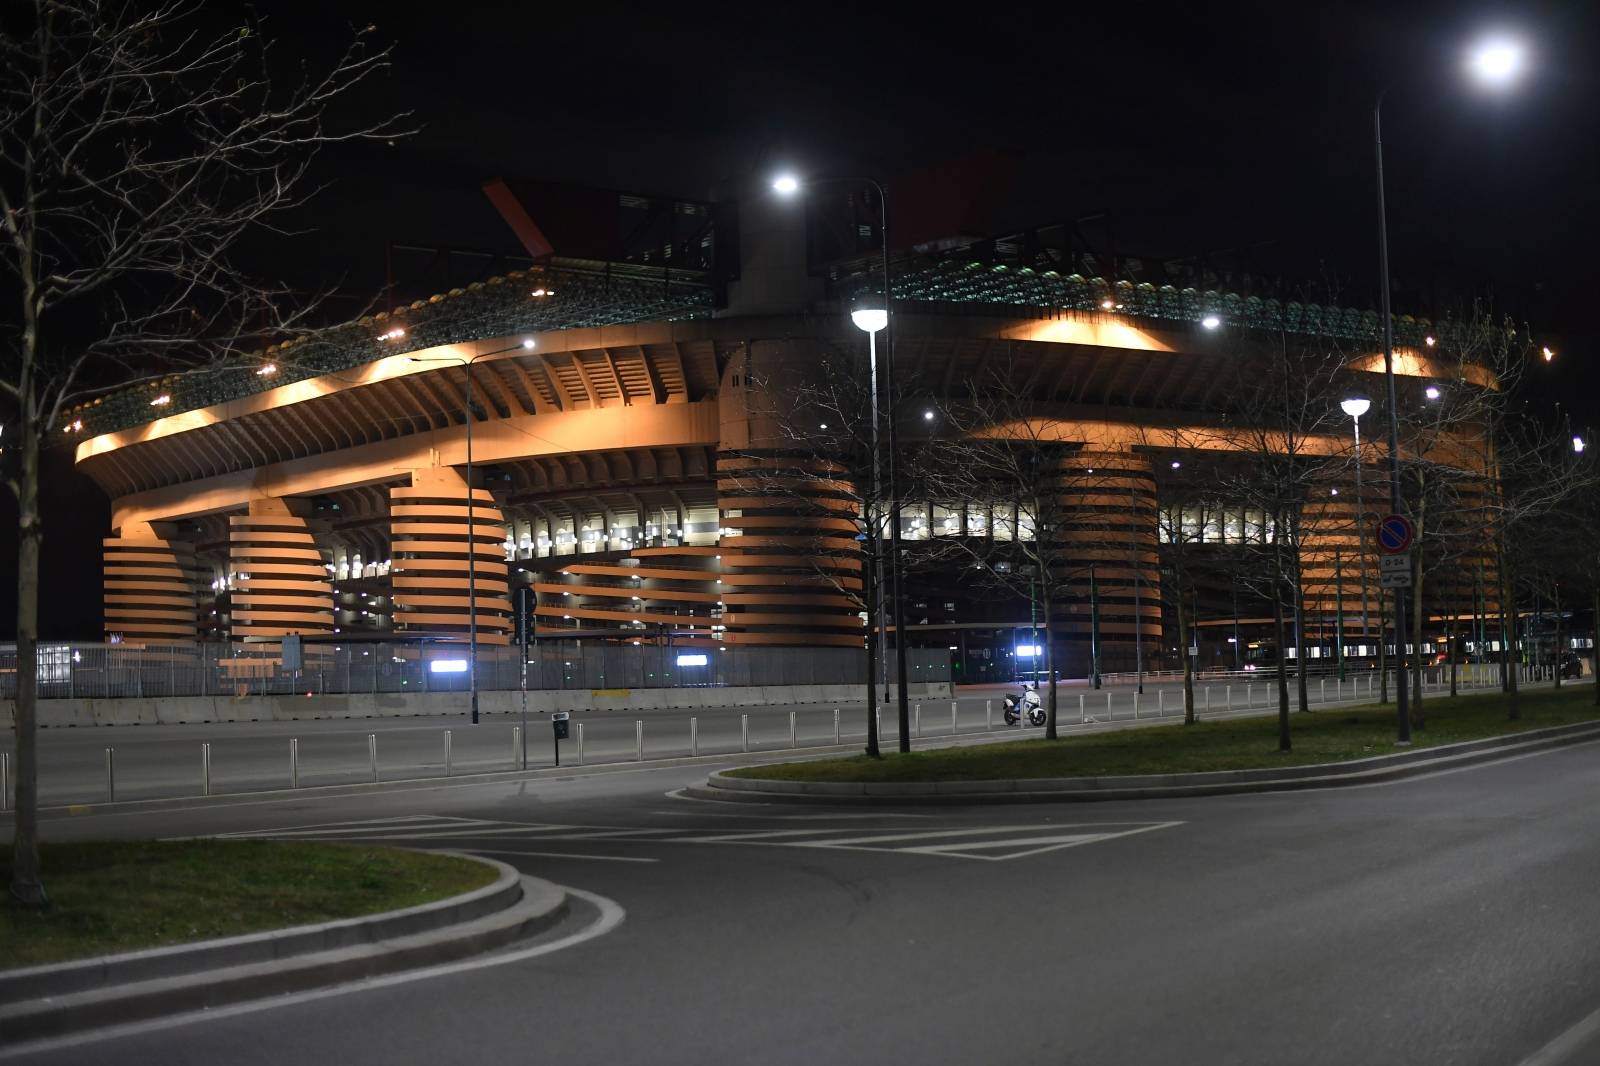 Soccer fans shut out of Inter Milan v Ludogorets match over coronavirus fears